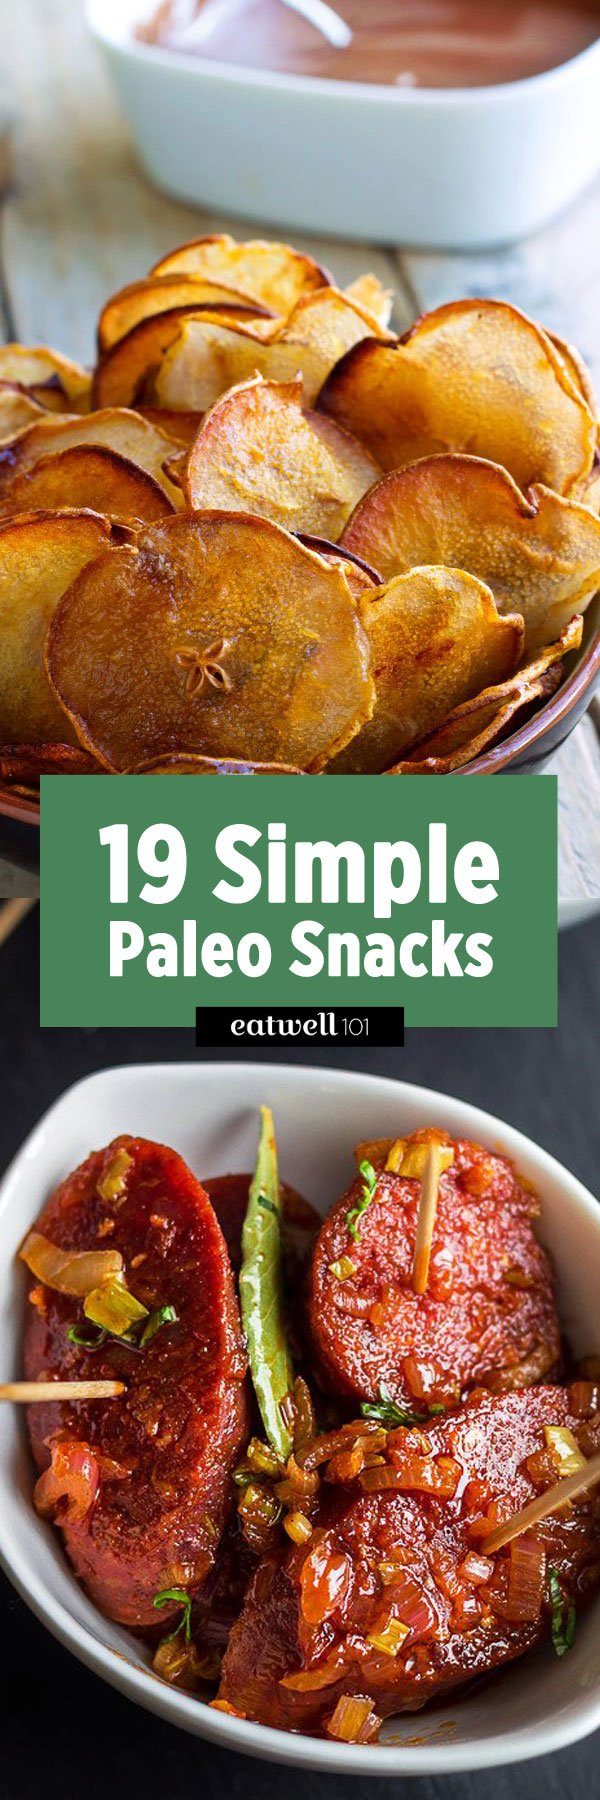 19 Simple Paleo Snacks You'll Love - #paleo #snack #recipes #eatwell101 - Looking for paleo snack recipes? Delicious Paleo-approved snacks for whenever hunger strikes.